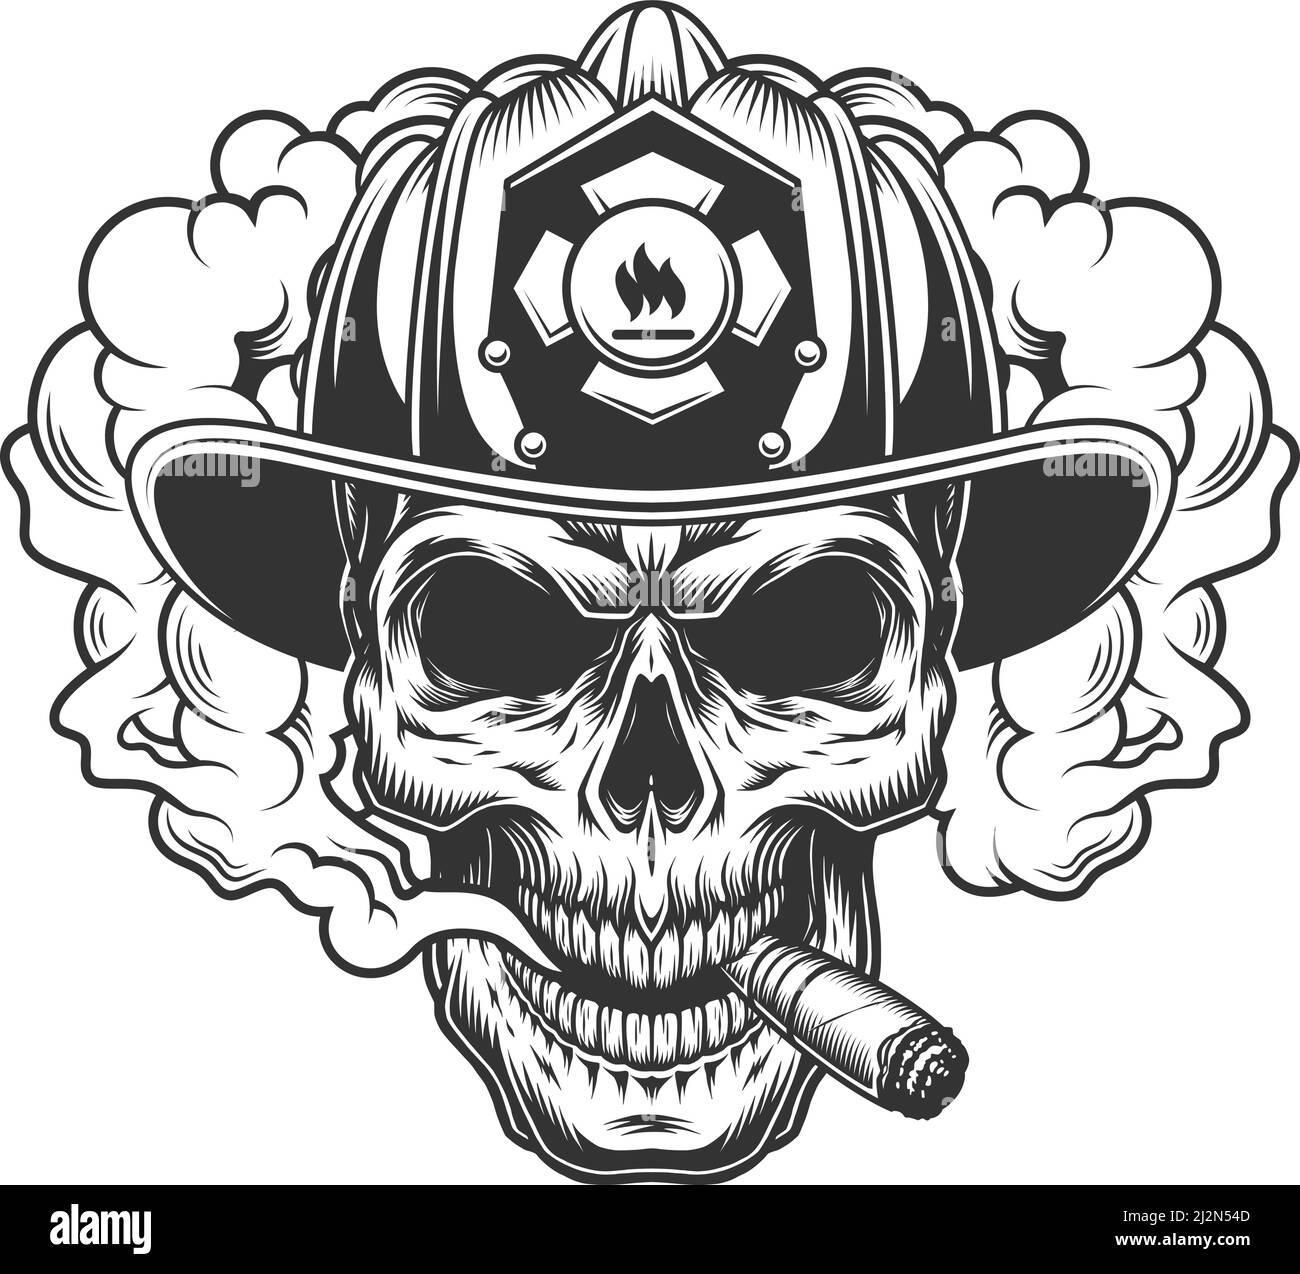 Skull in smoke cloud and firefighter helmet. Vector illustration Stock Vector